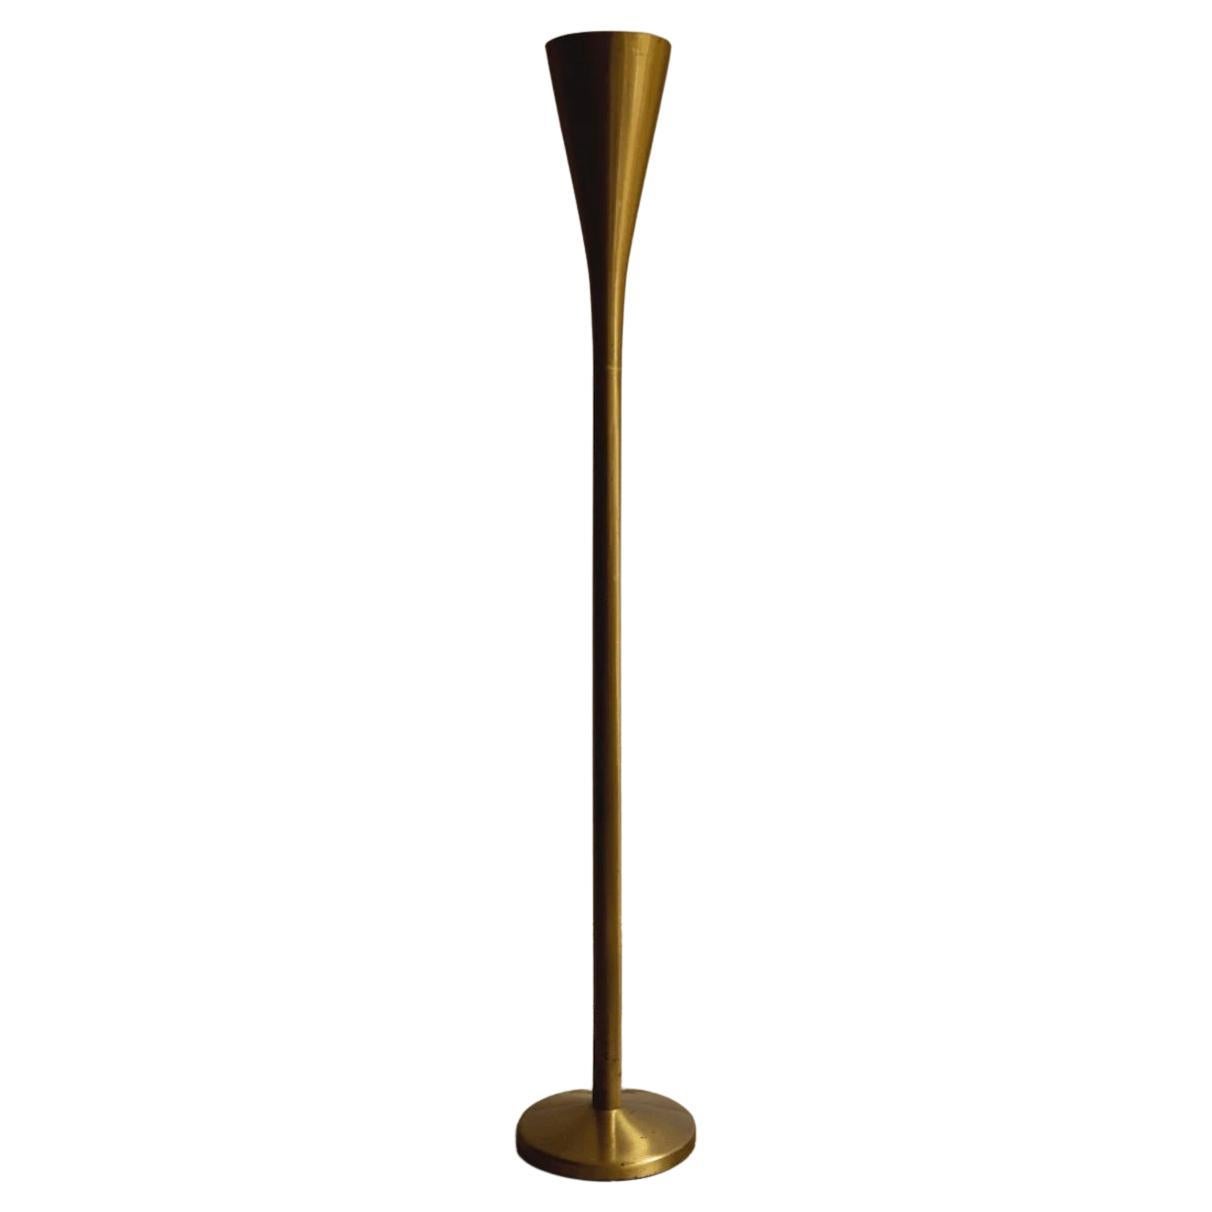 Pietro Chiesa Lacquered Brass ‘Luminator’ Floor Lamp